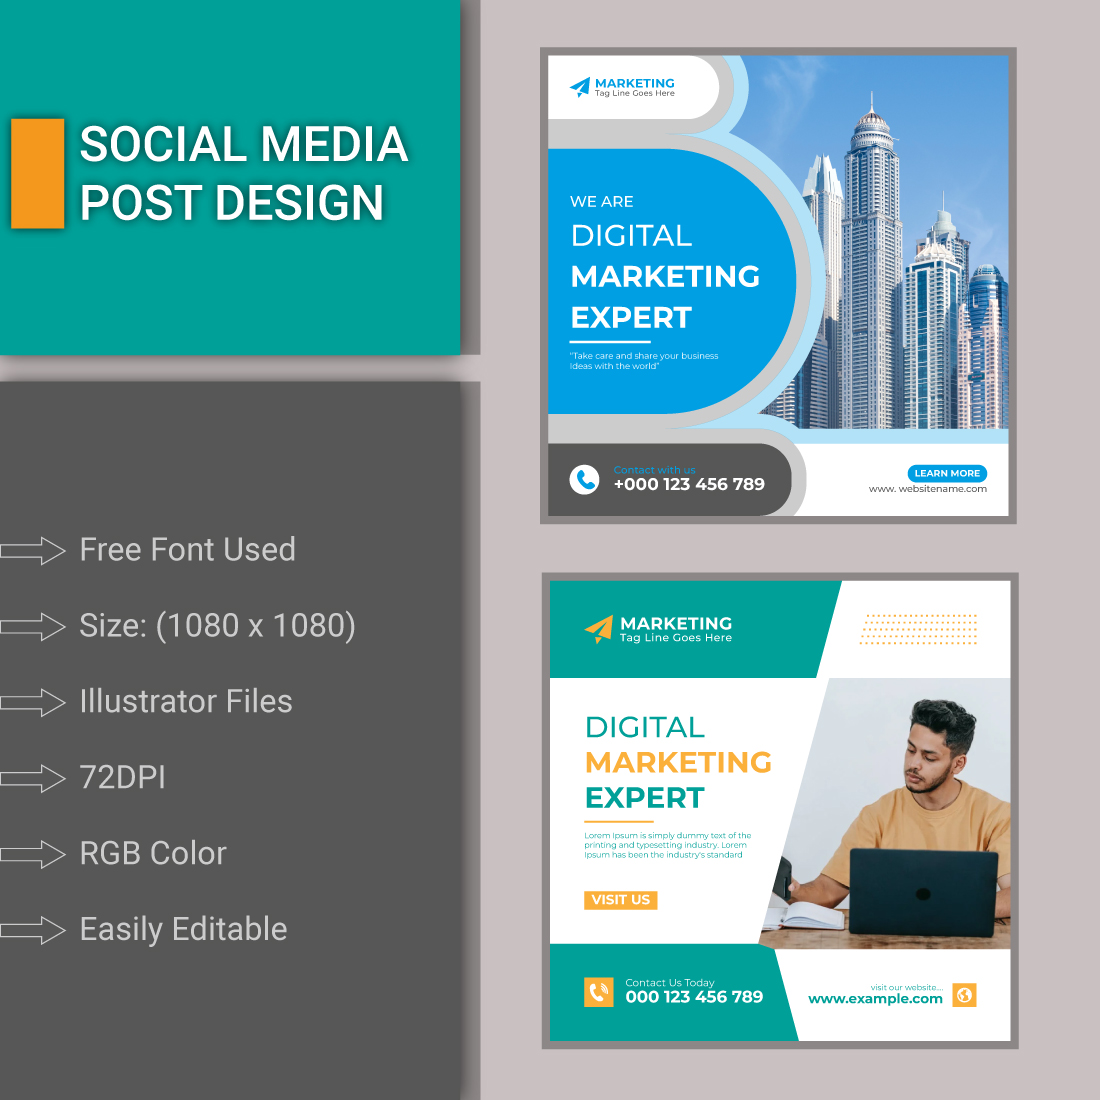 Social Media Posts Design cover image.